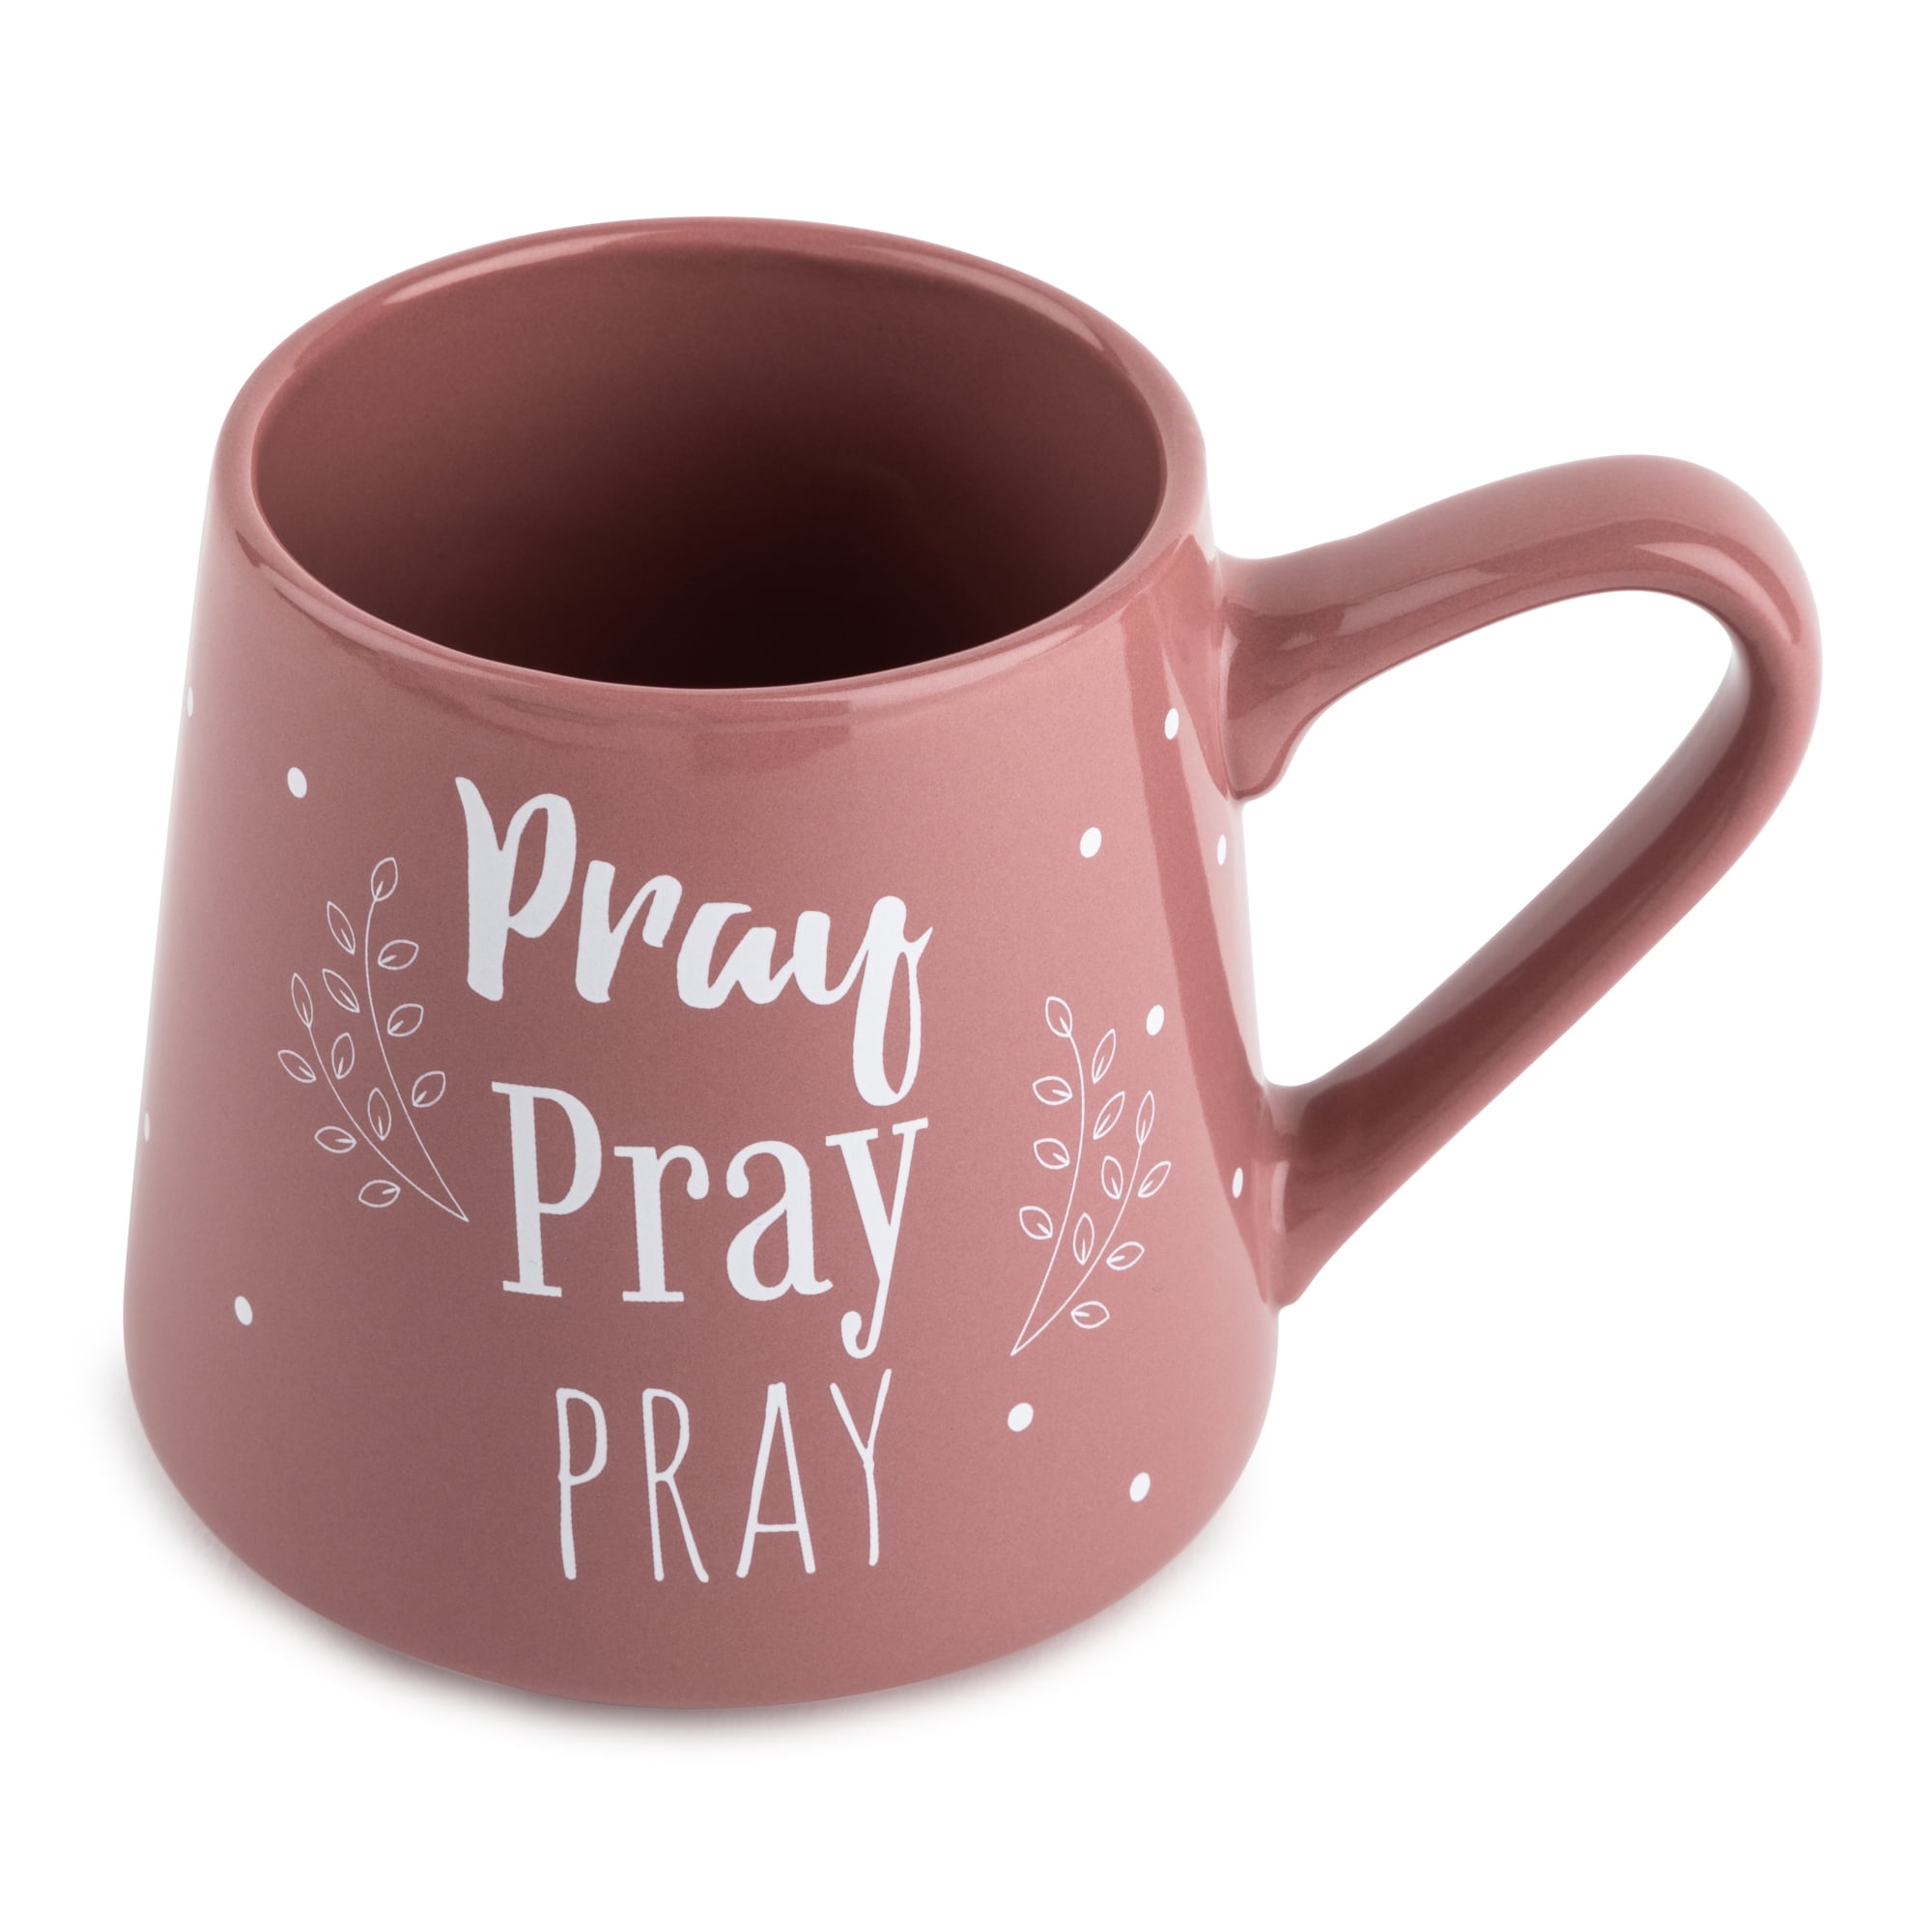 Thyme & Table Pray Ceramic Coffee Mug, 20 fl oz